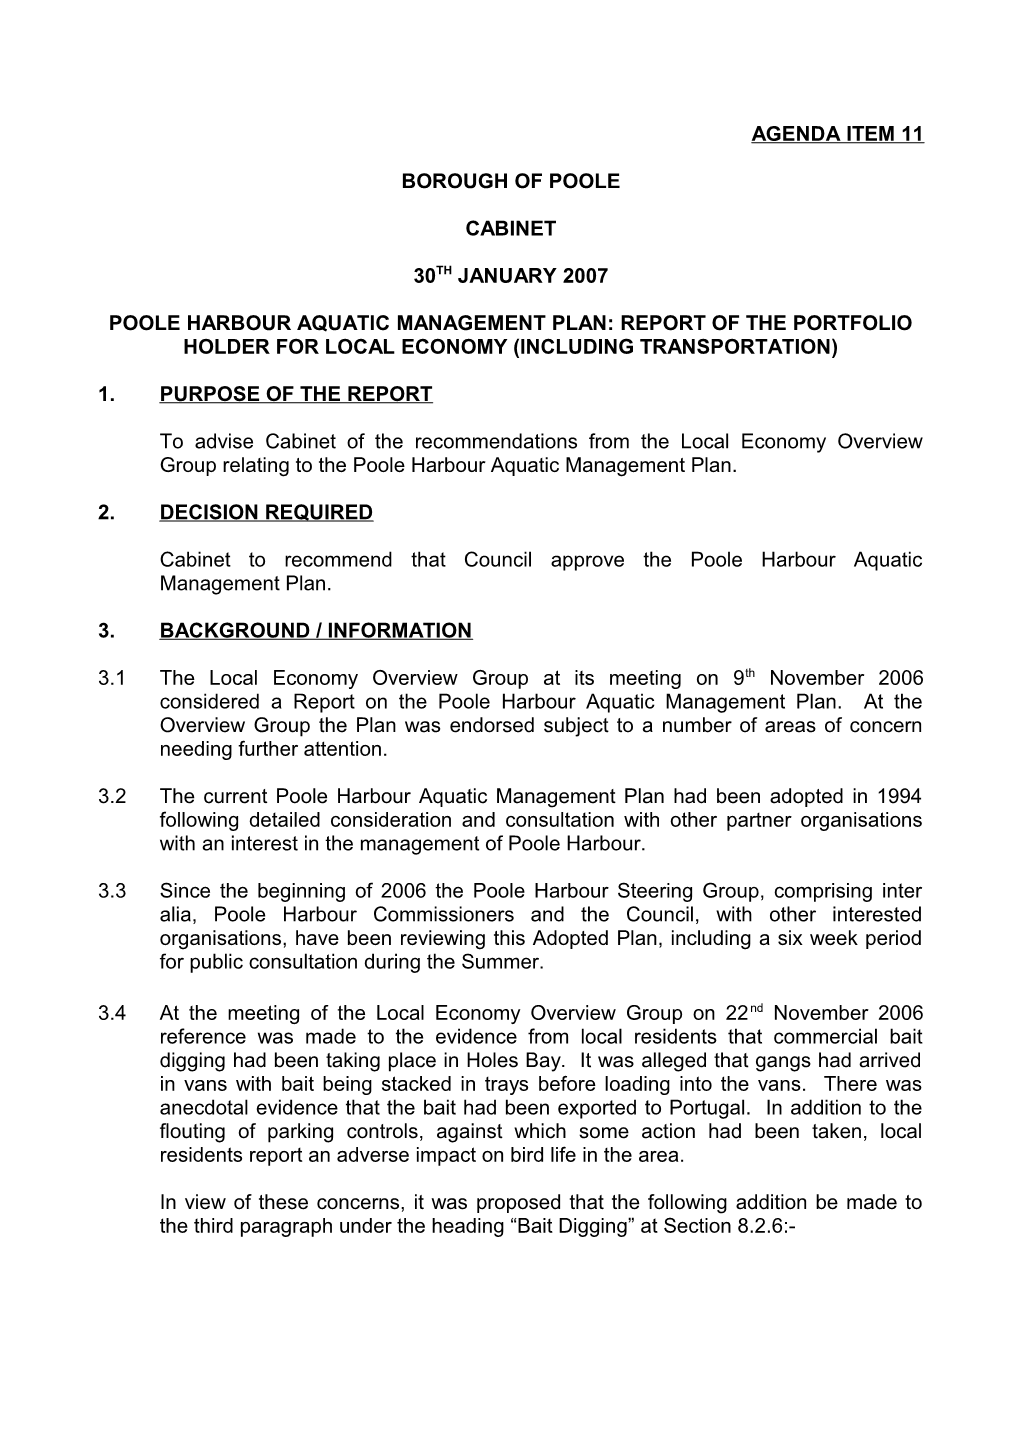 Poole Harbour Aquatic Management Plan: Report of the Portfolio Holder for Local Economy